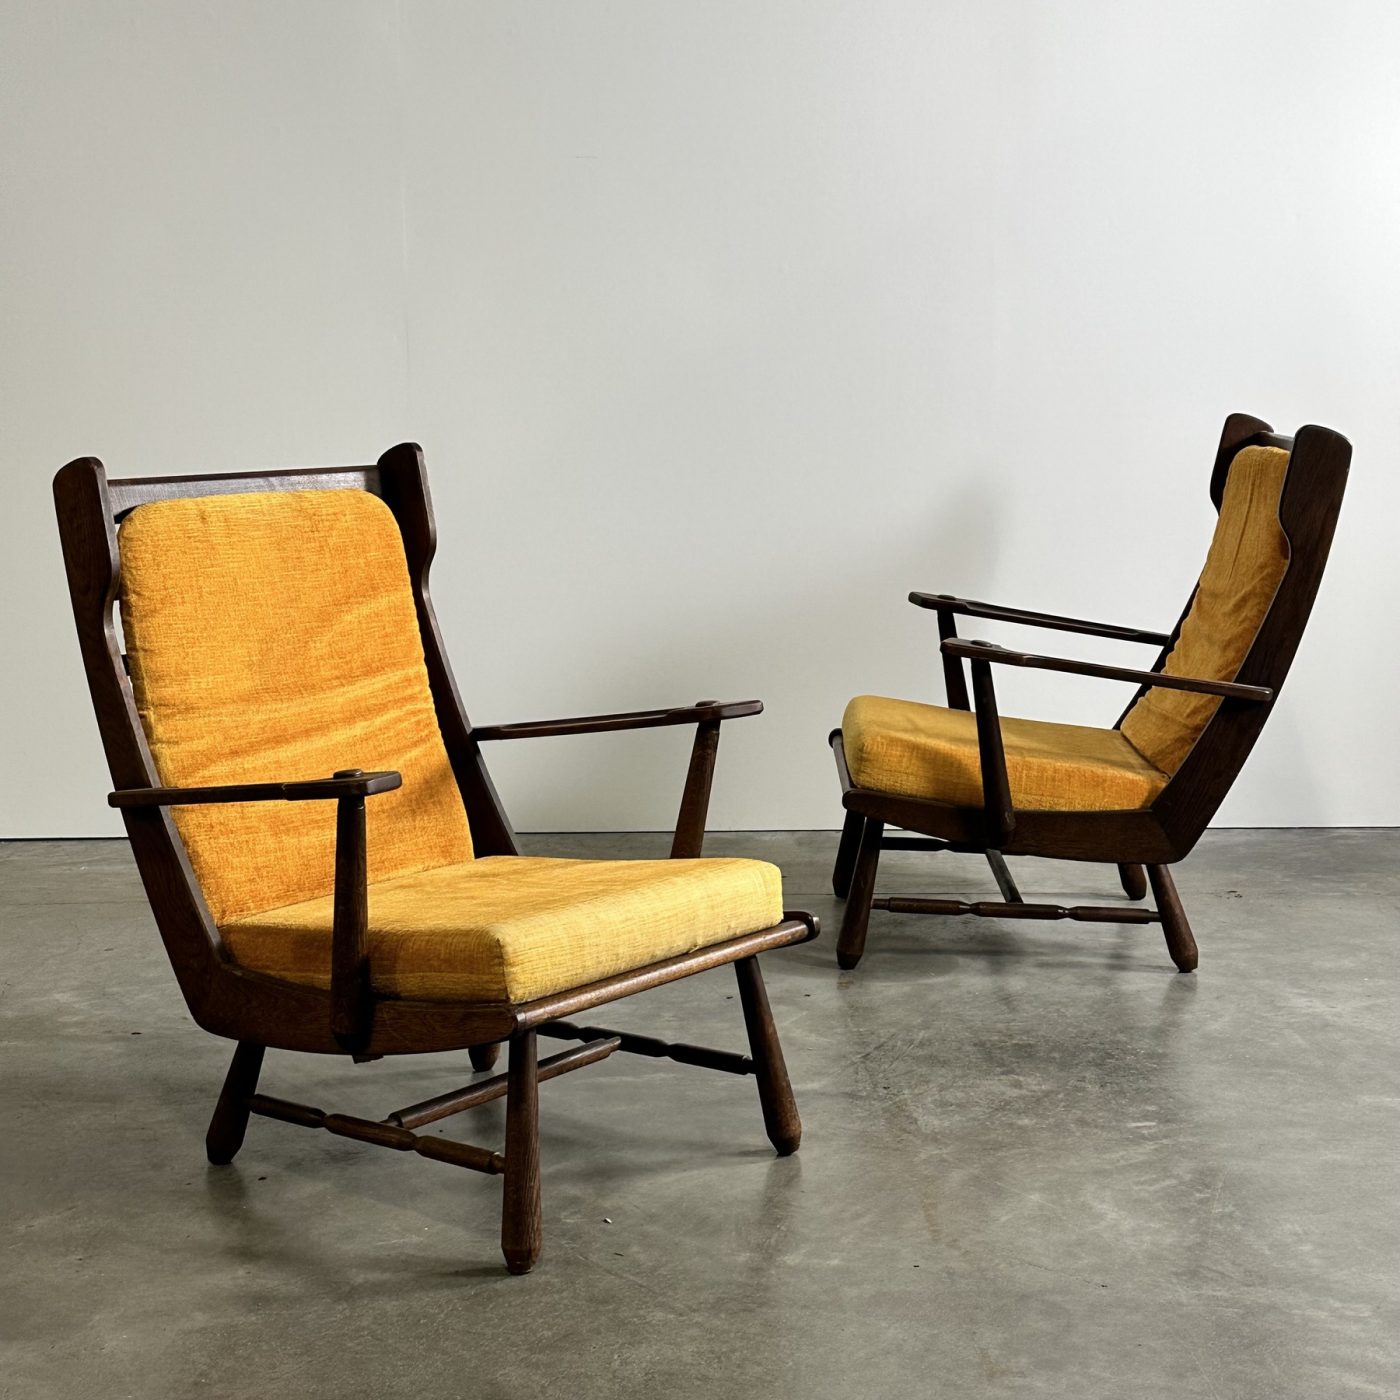 objet-vagabond-midcentury-armchairs0001